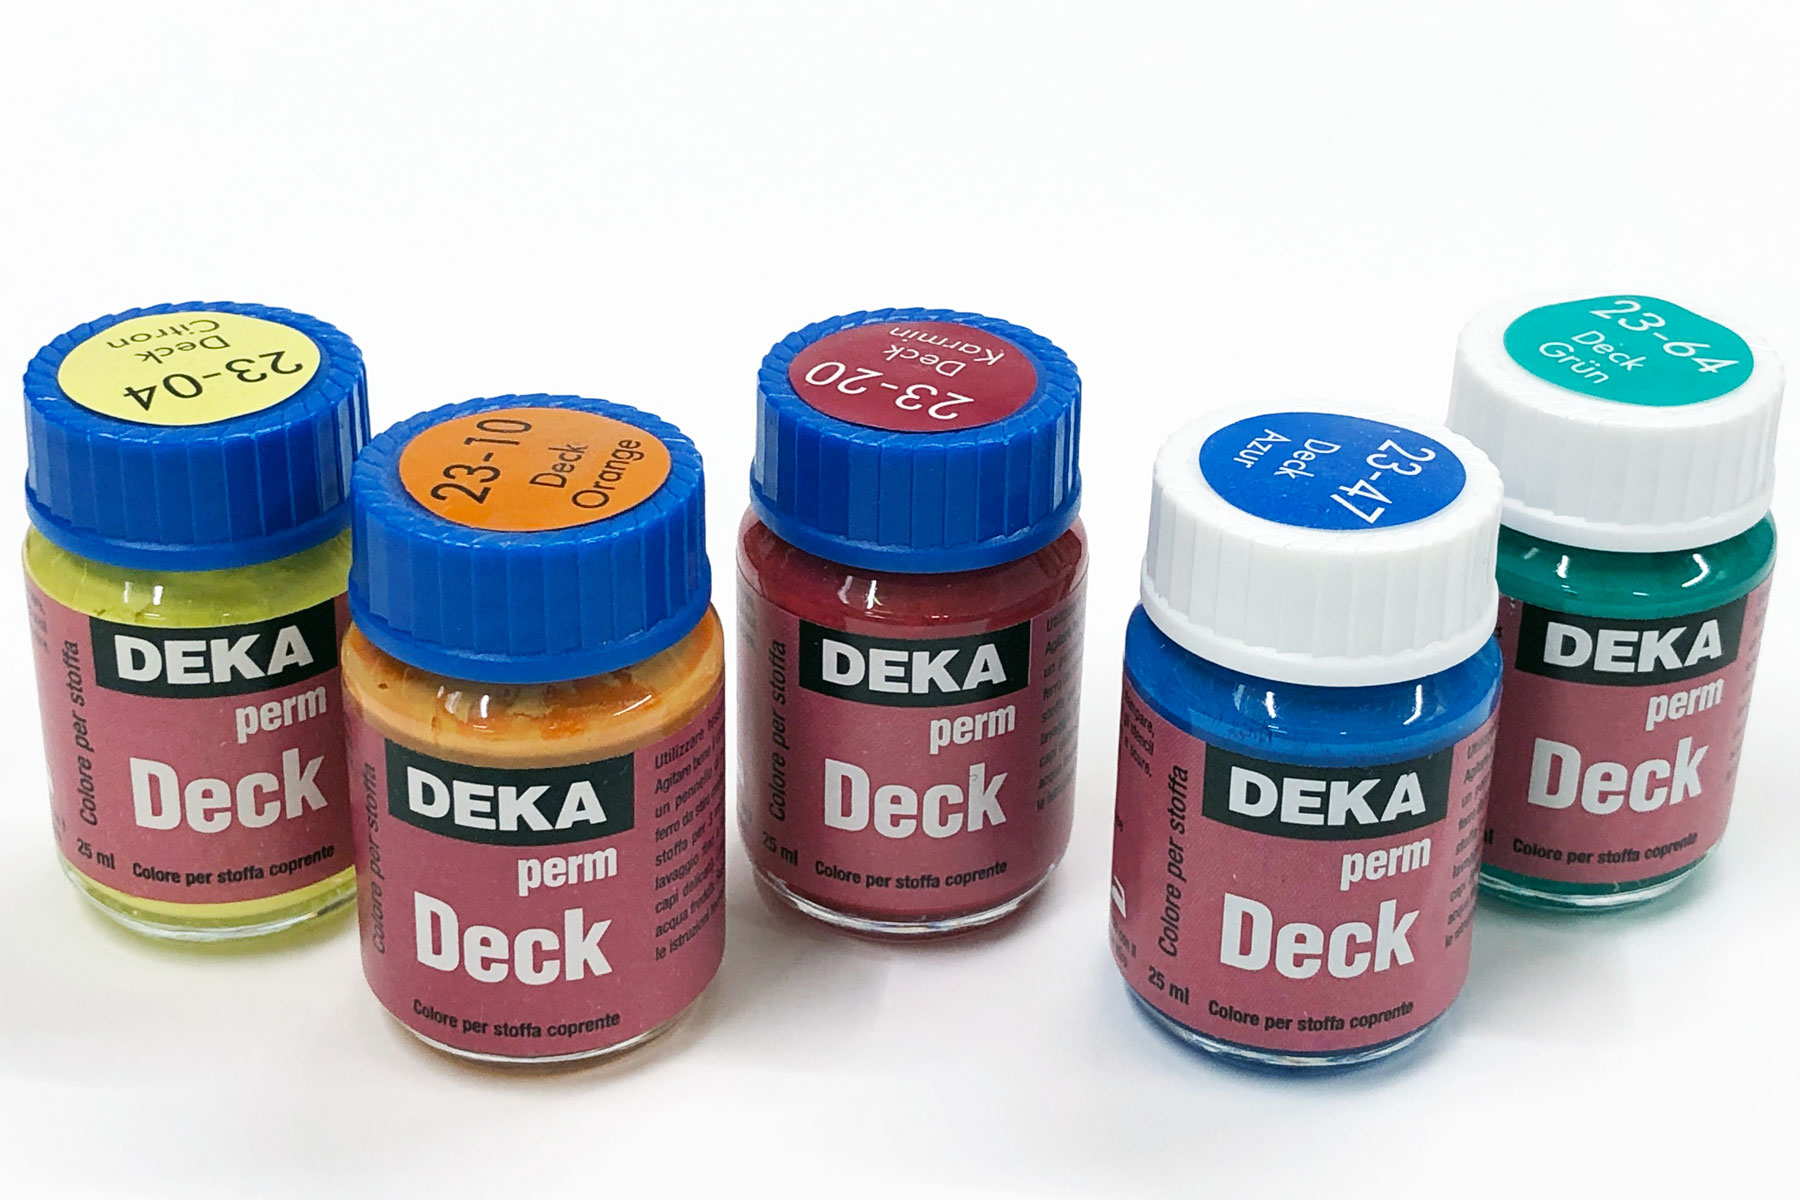 Deka Permanent - 25 ml - (33 tinte)